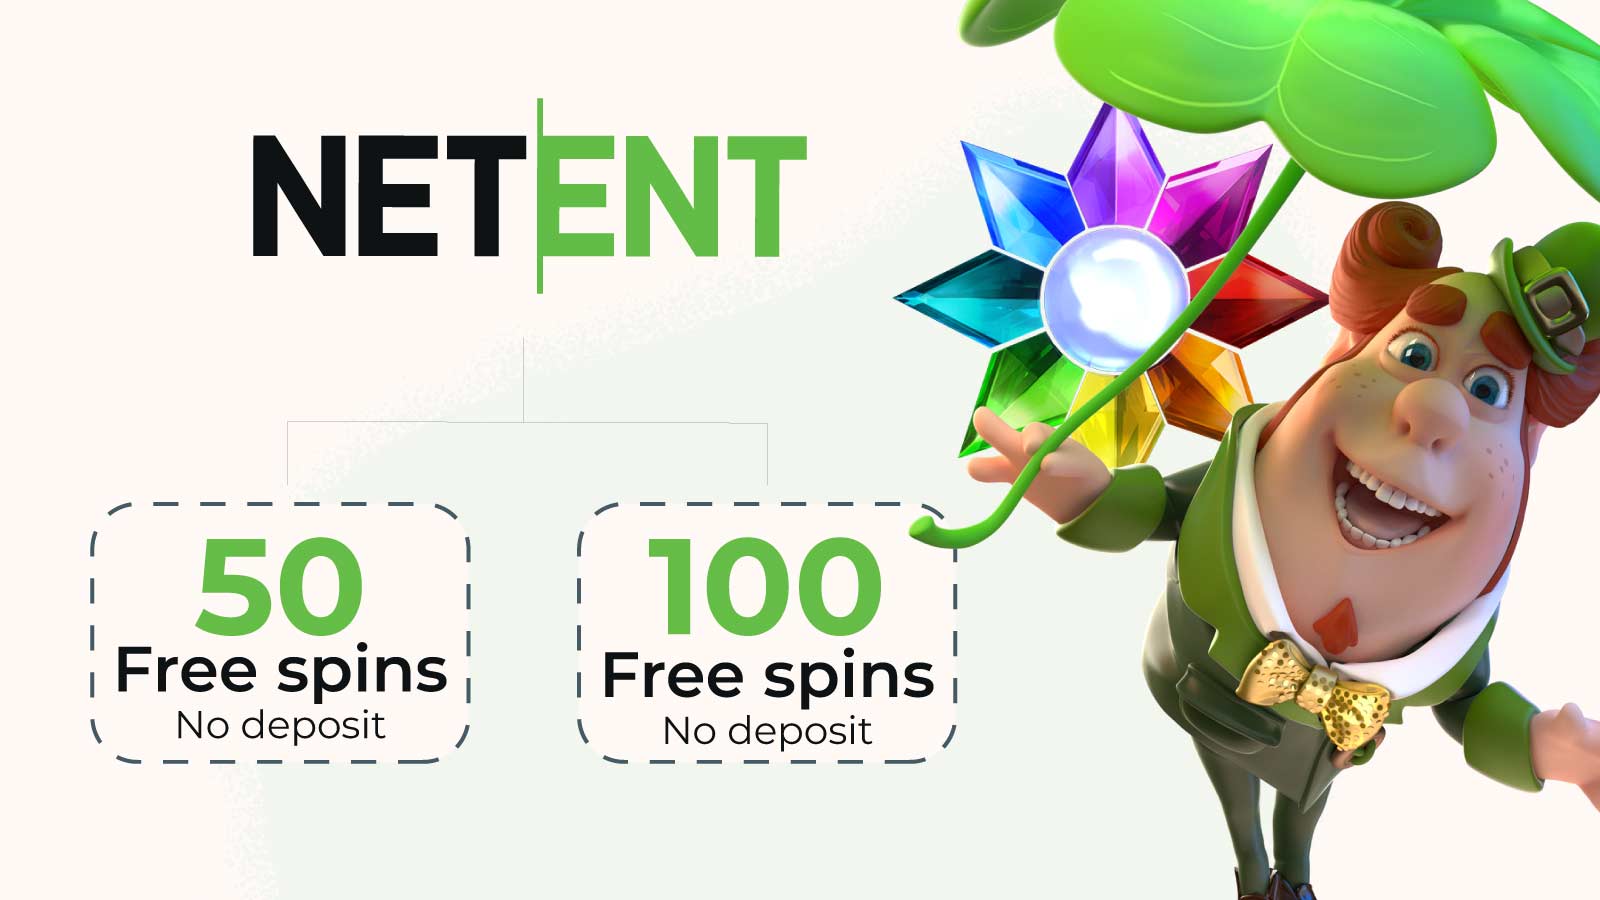 Types of NetEnt No Deposit Free Spins